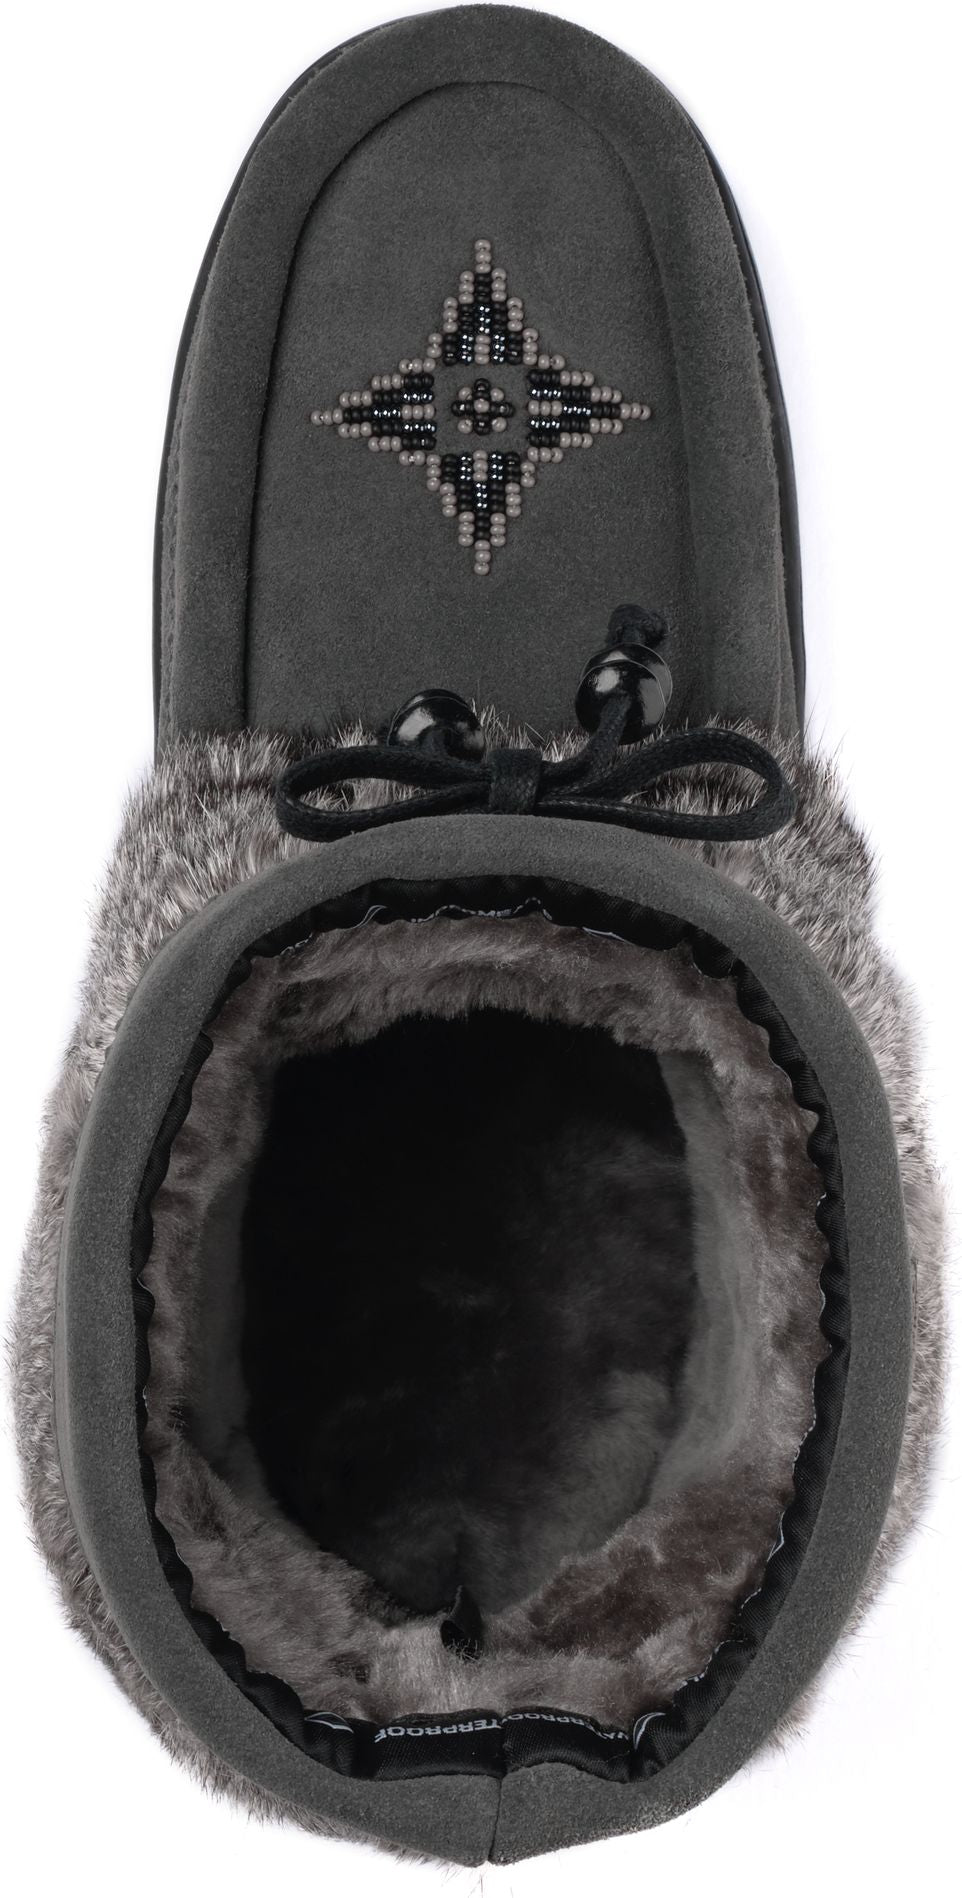 Manitobah Mukluks Boots Keewatin Waterproof Charcoal